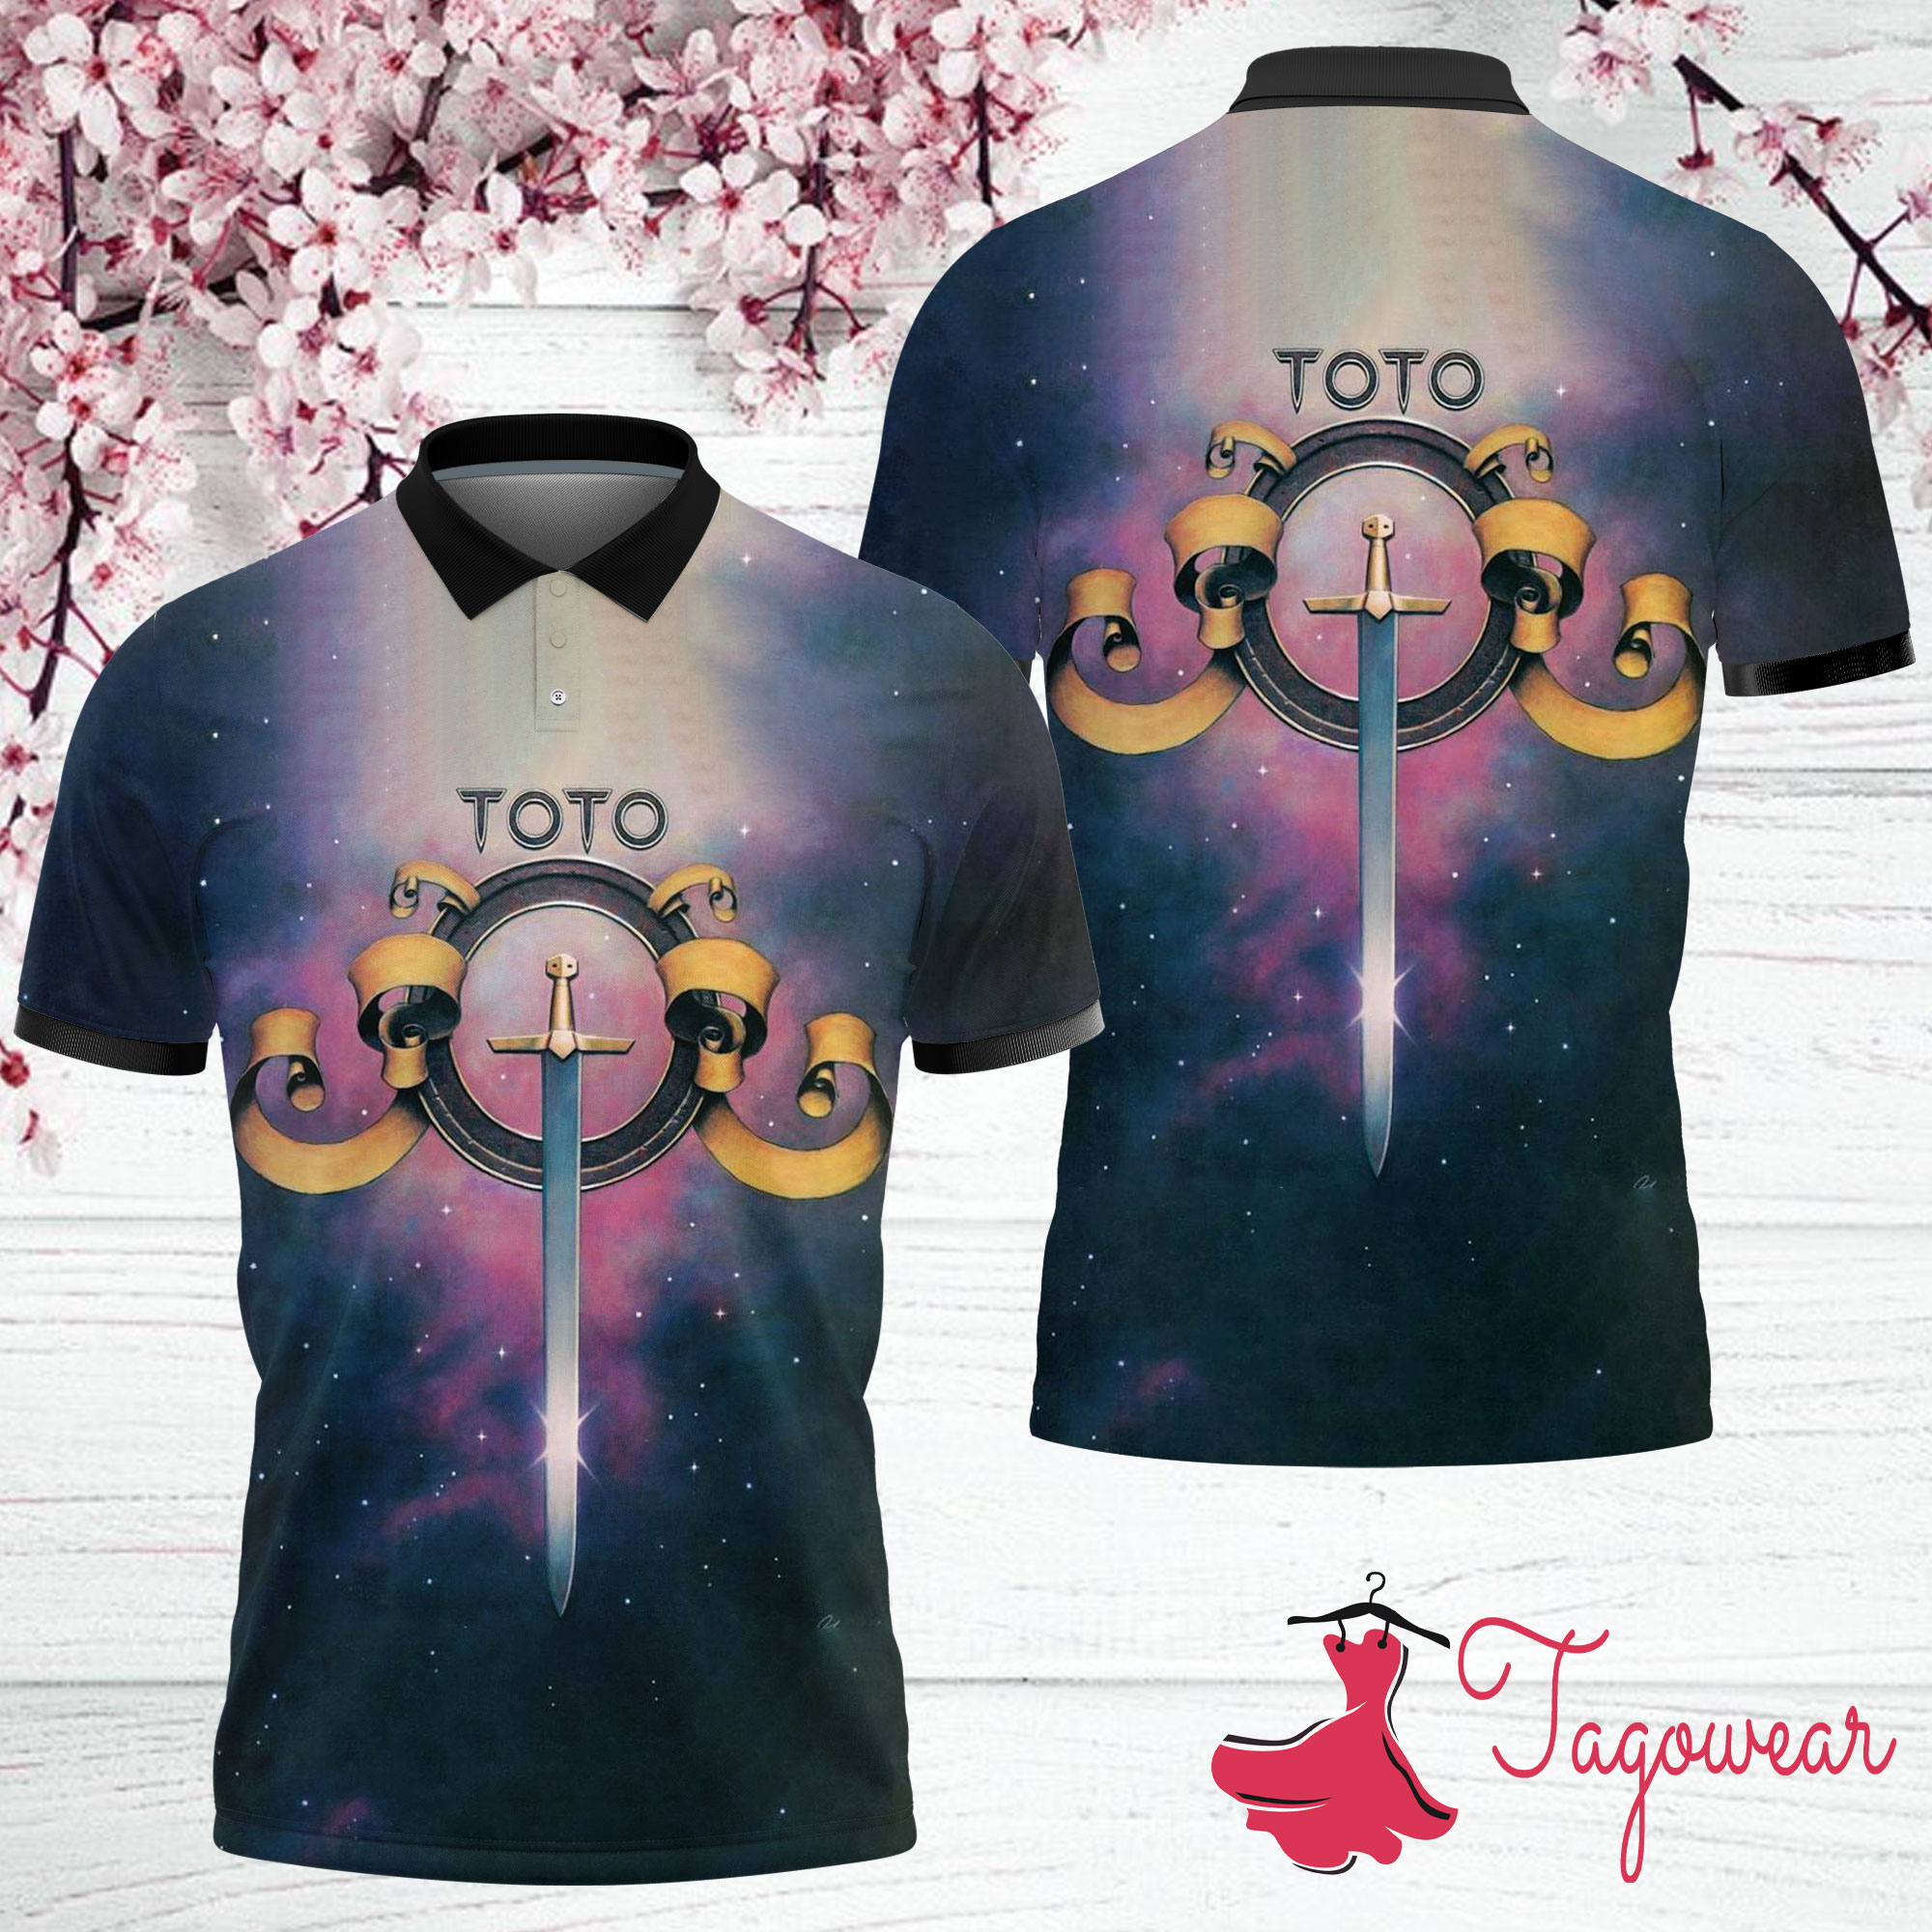 Toto Album Cover Polo Shirt